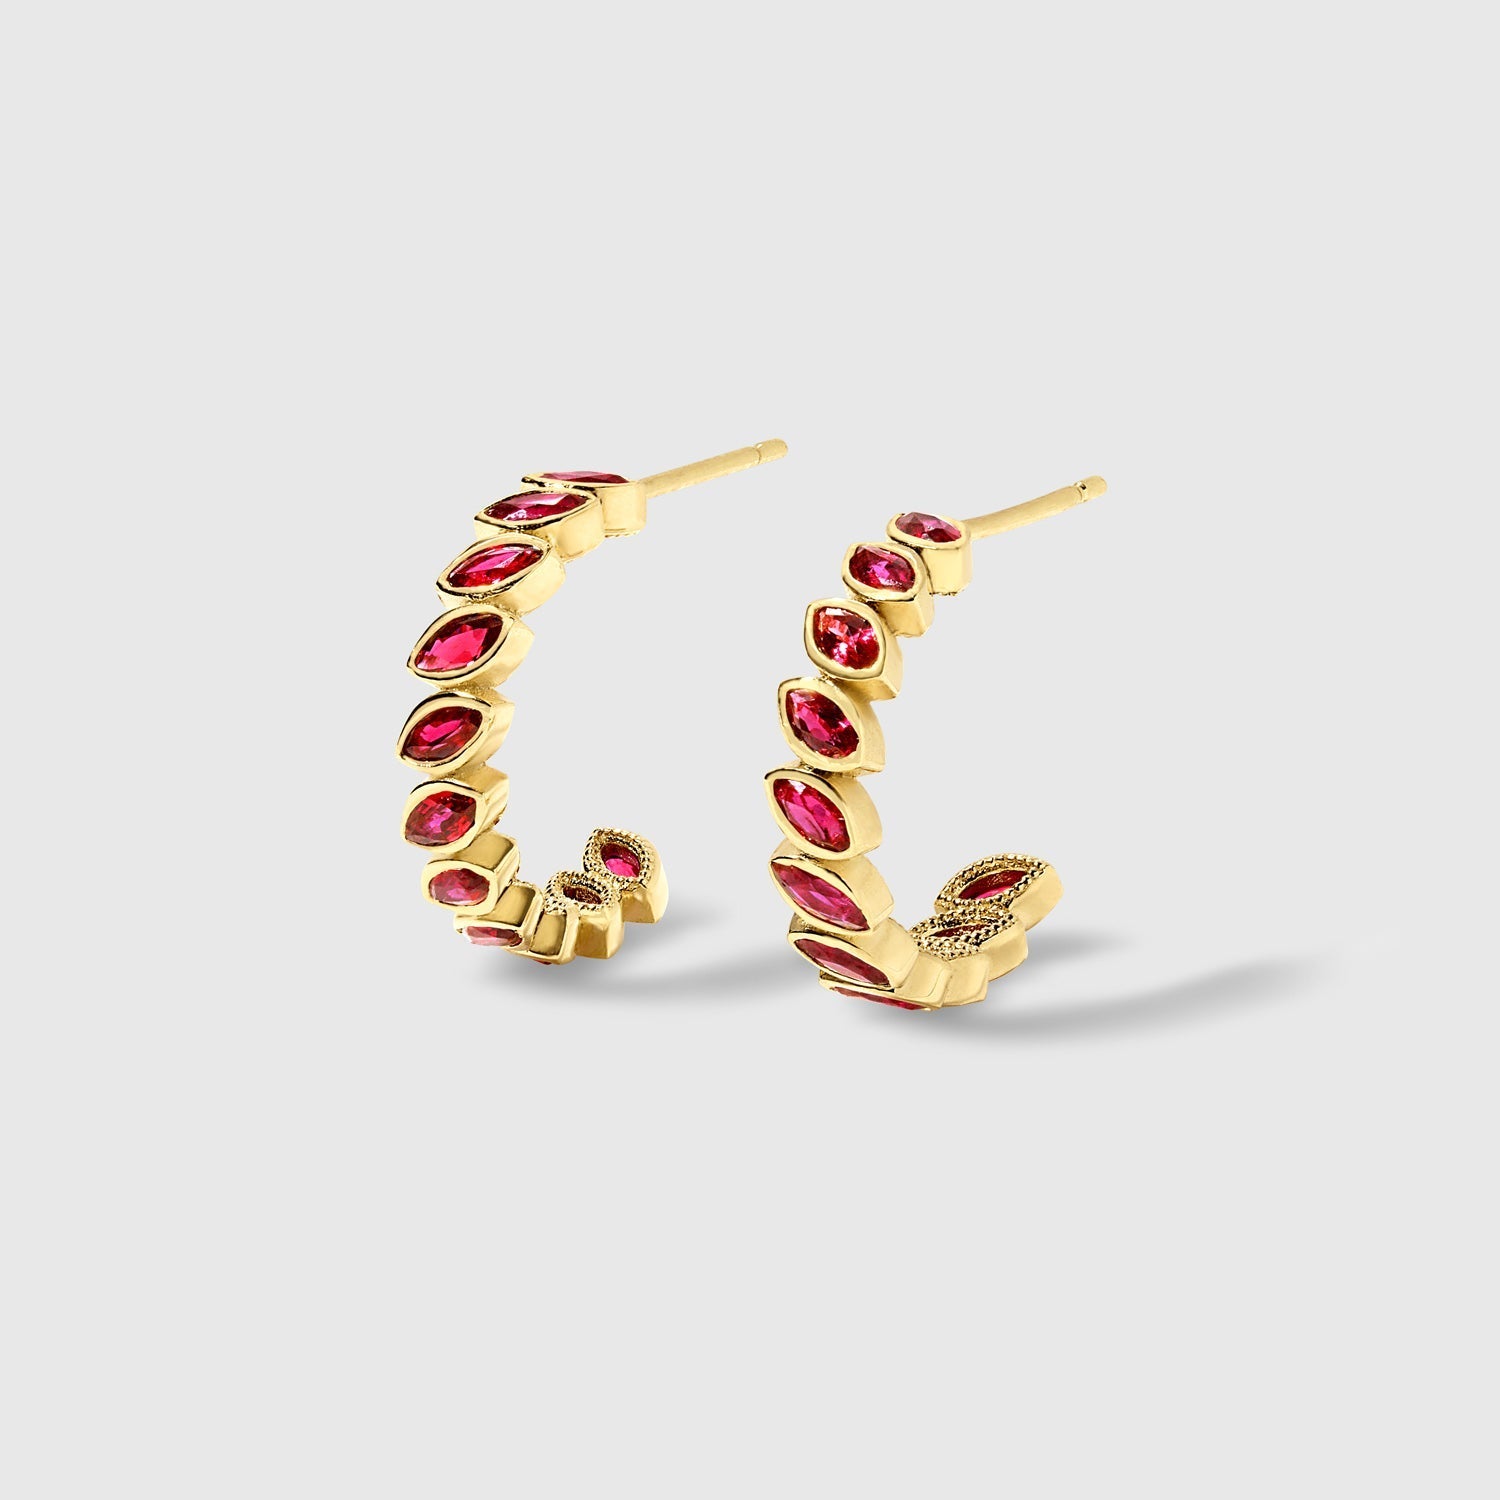 Lilita - Ruby Hoop Earrings – La Fleur Rouge Collection of Rubies & Solid Gold - Aurora Laffite Jewelry